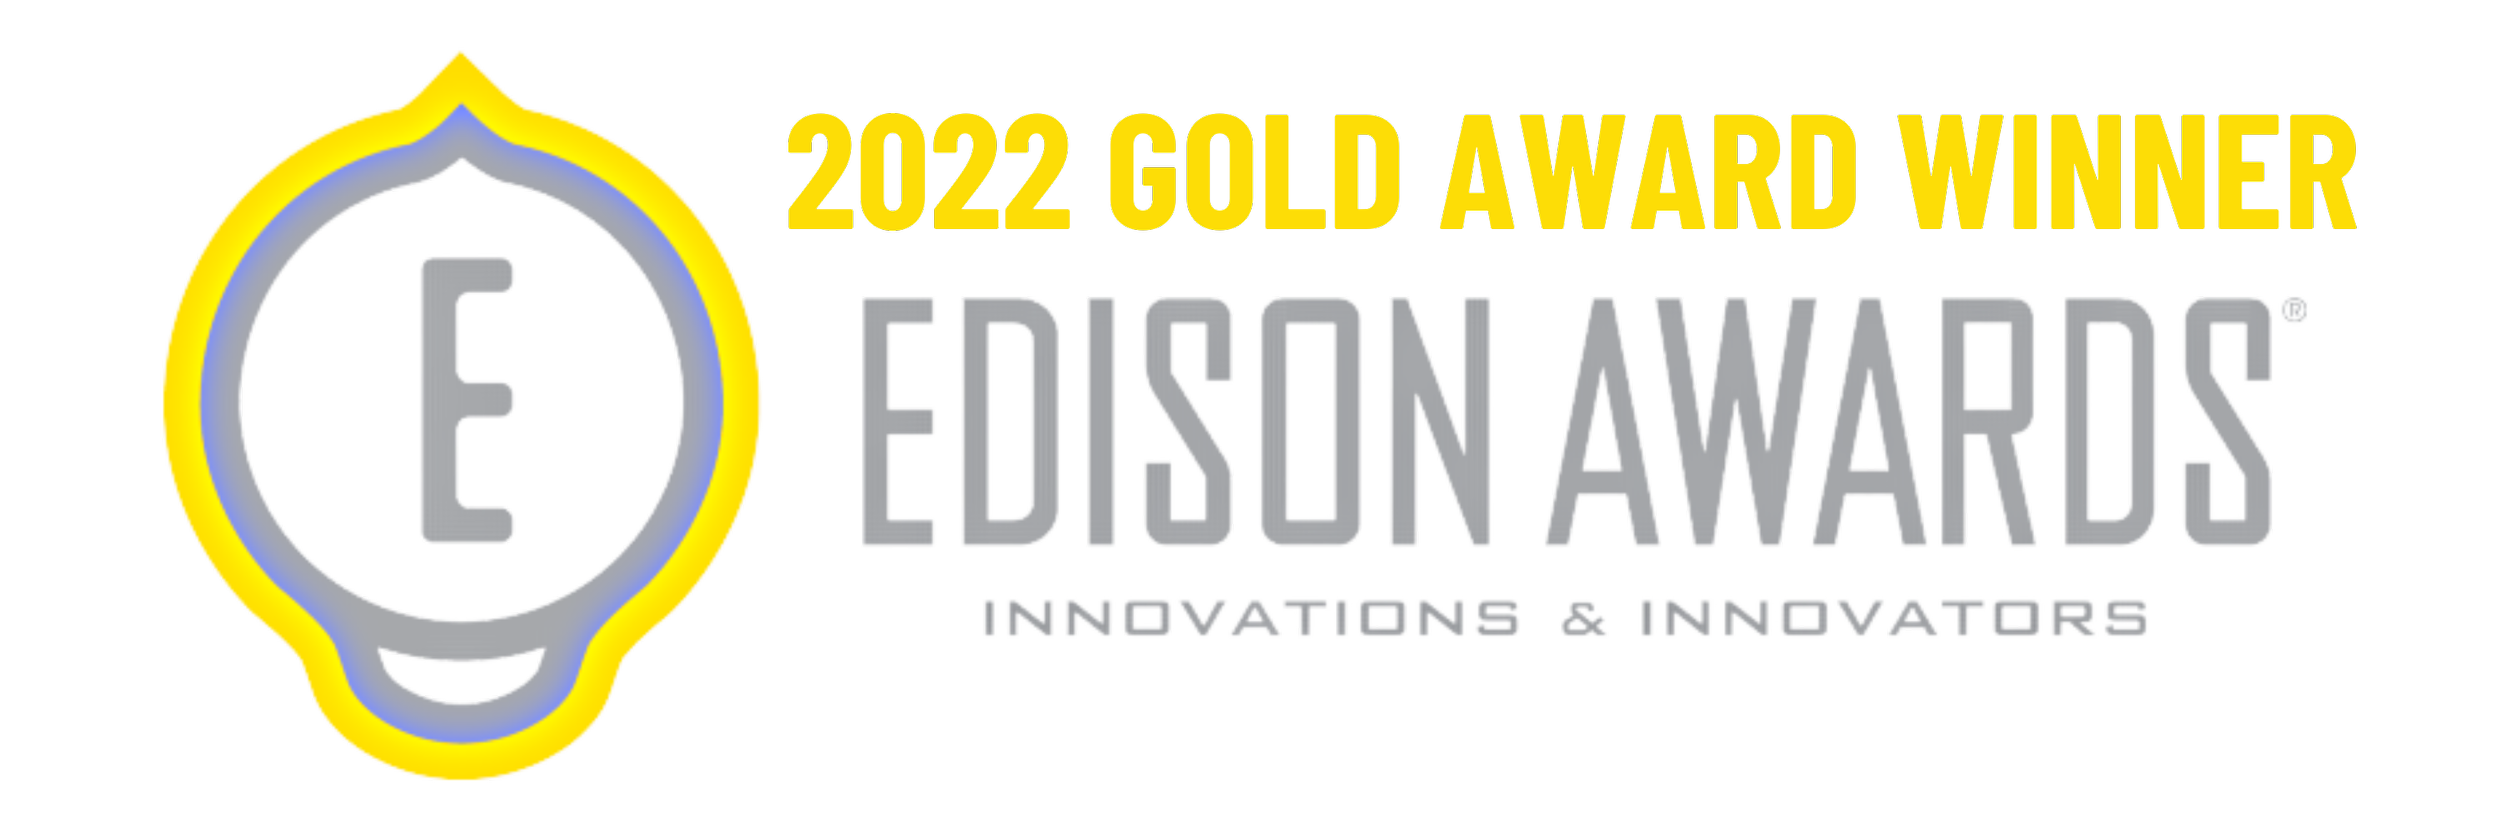 2022 Gold Award Winner (300 × 100 px) (3000 × 1000 px).png